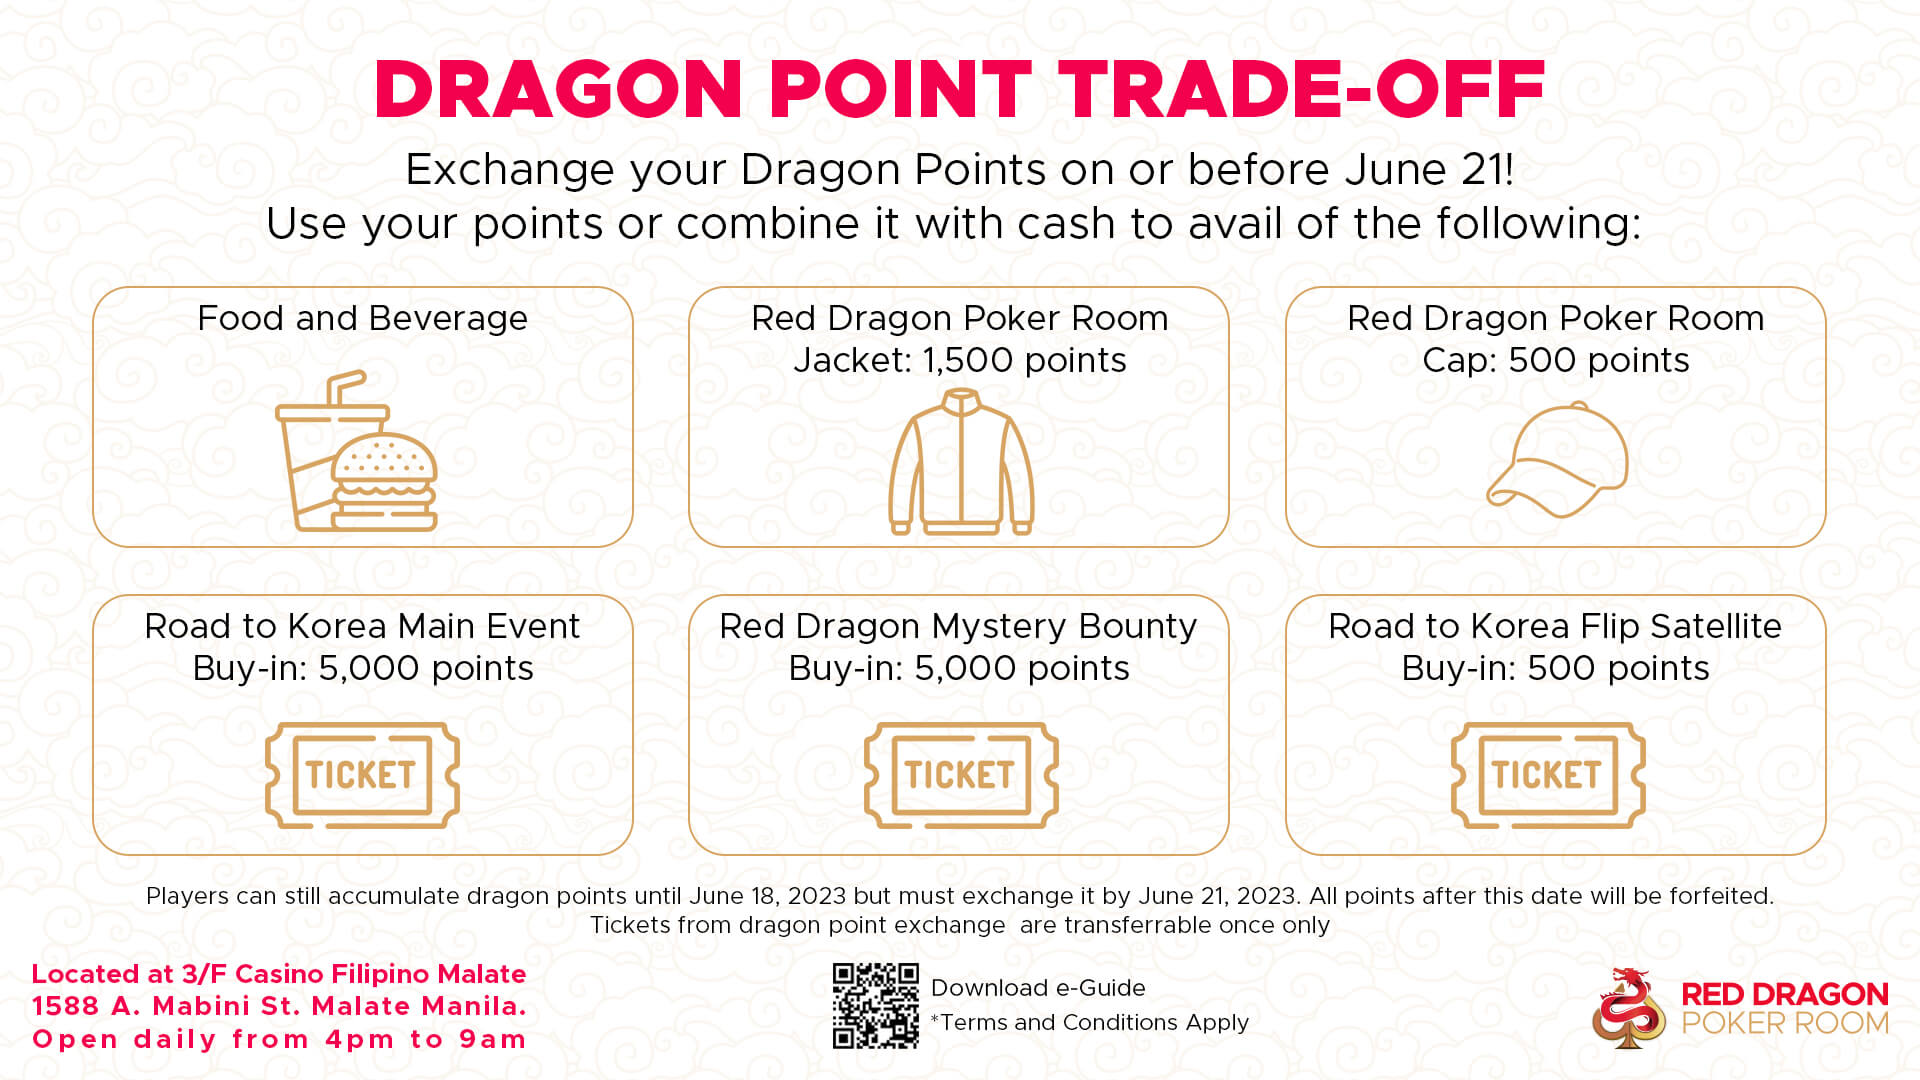 Red Dragon Poker Room Jacket Promo